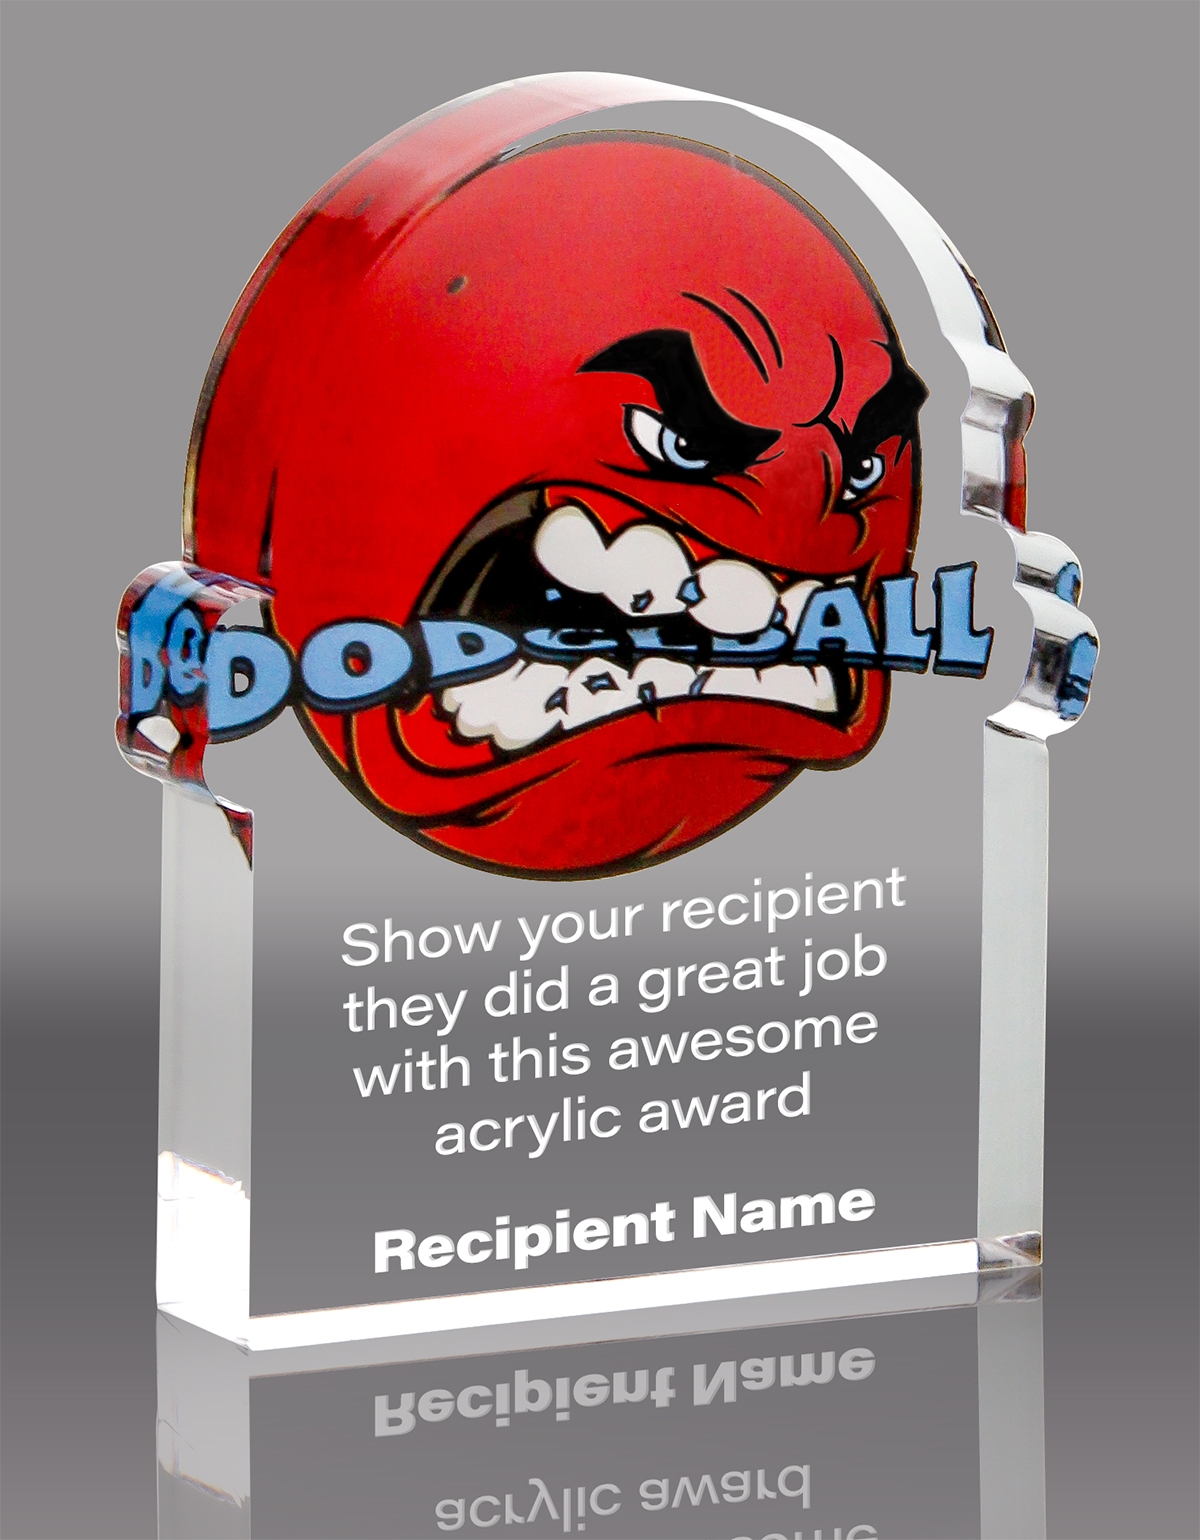 Dodgeball Krunch Acrylic Award- 5x6 inch